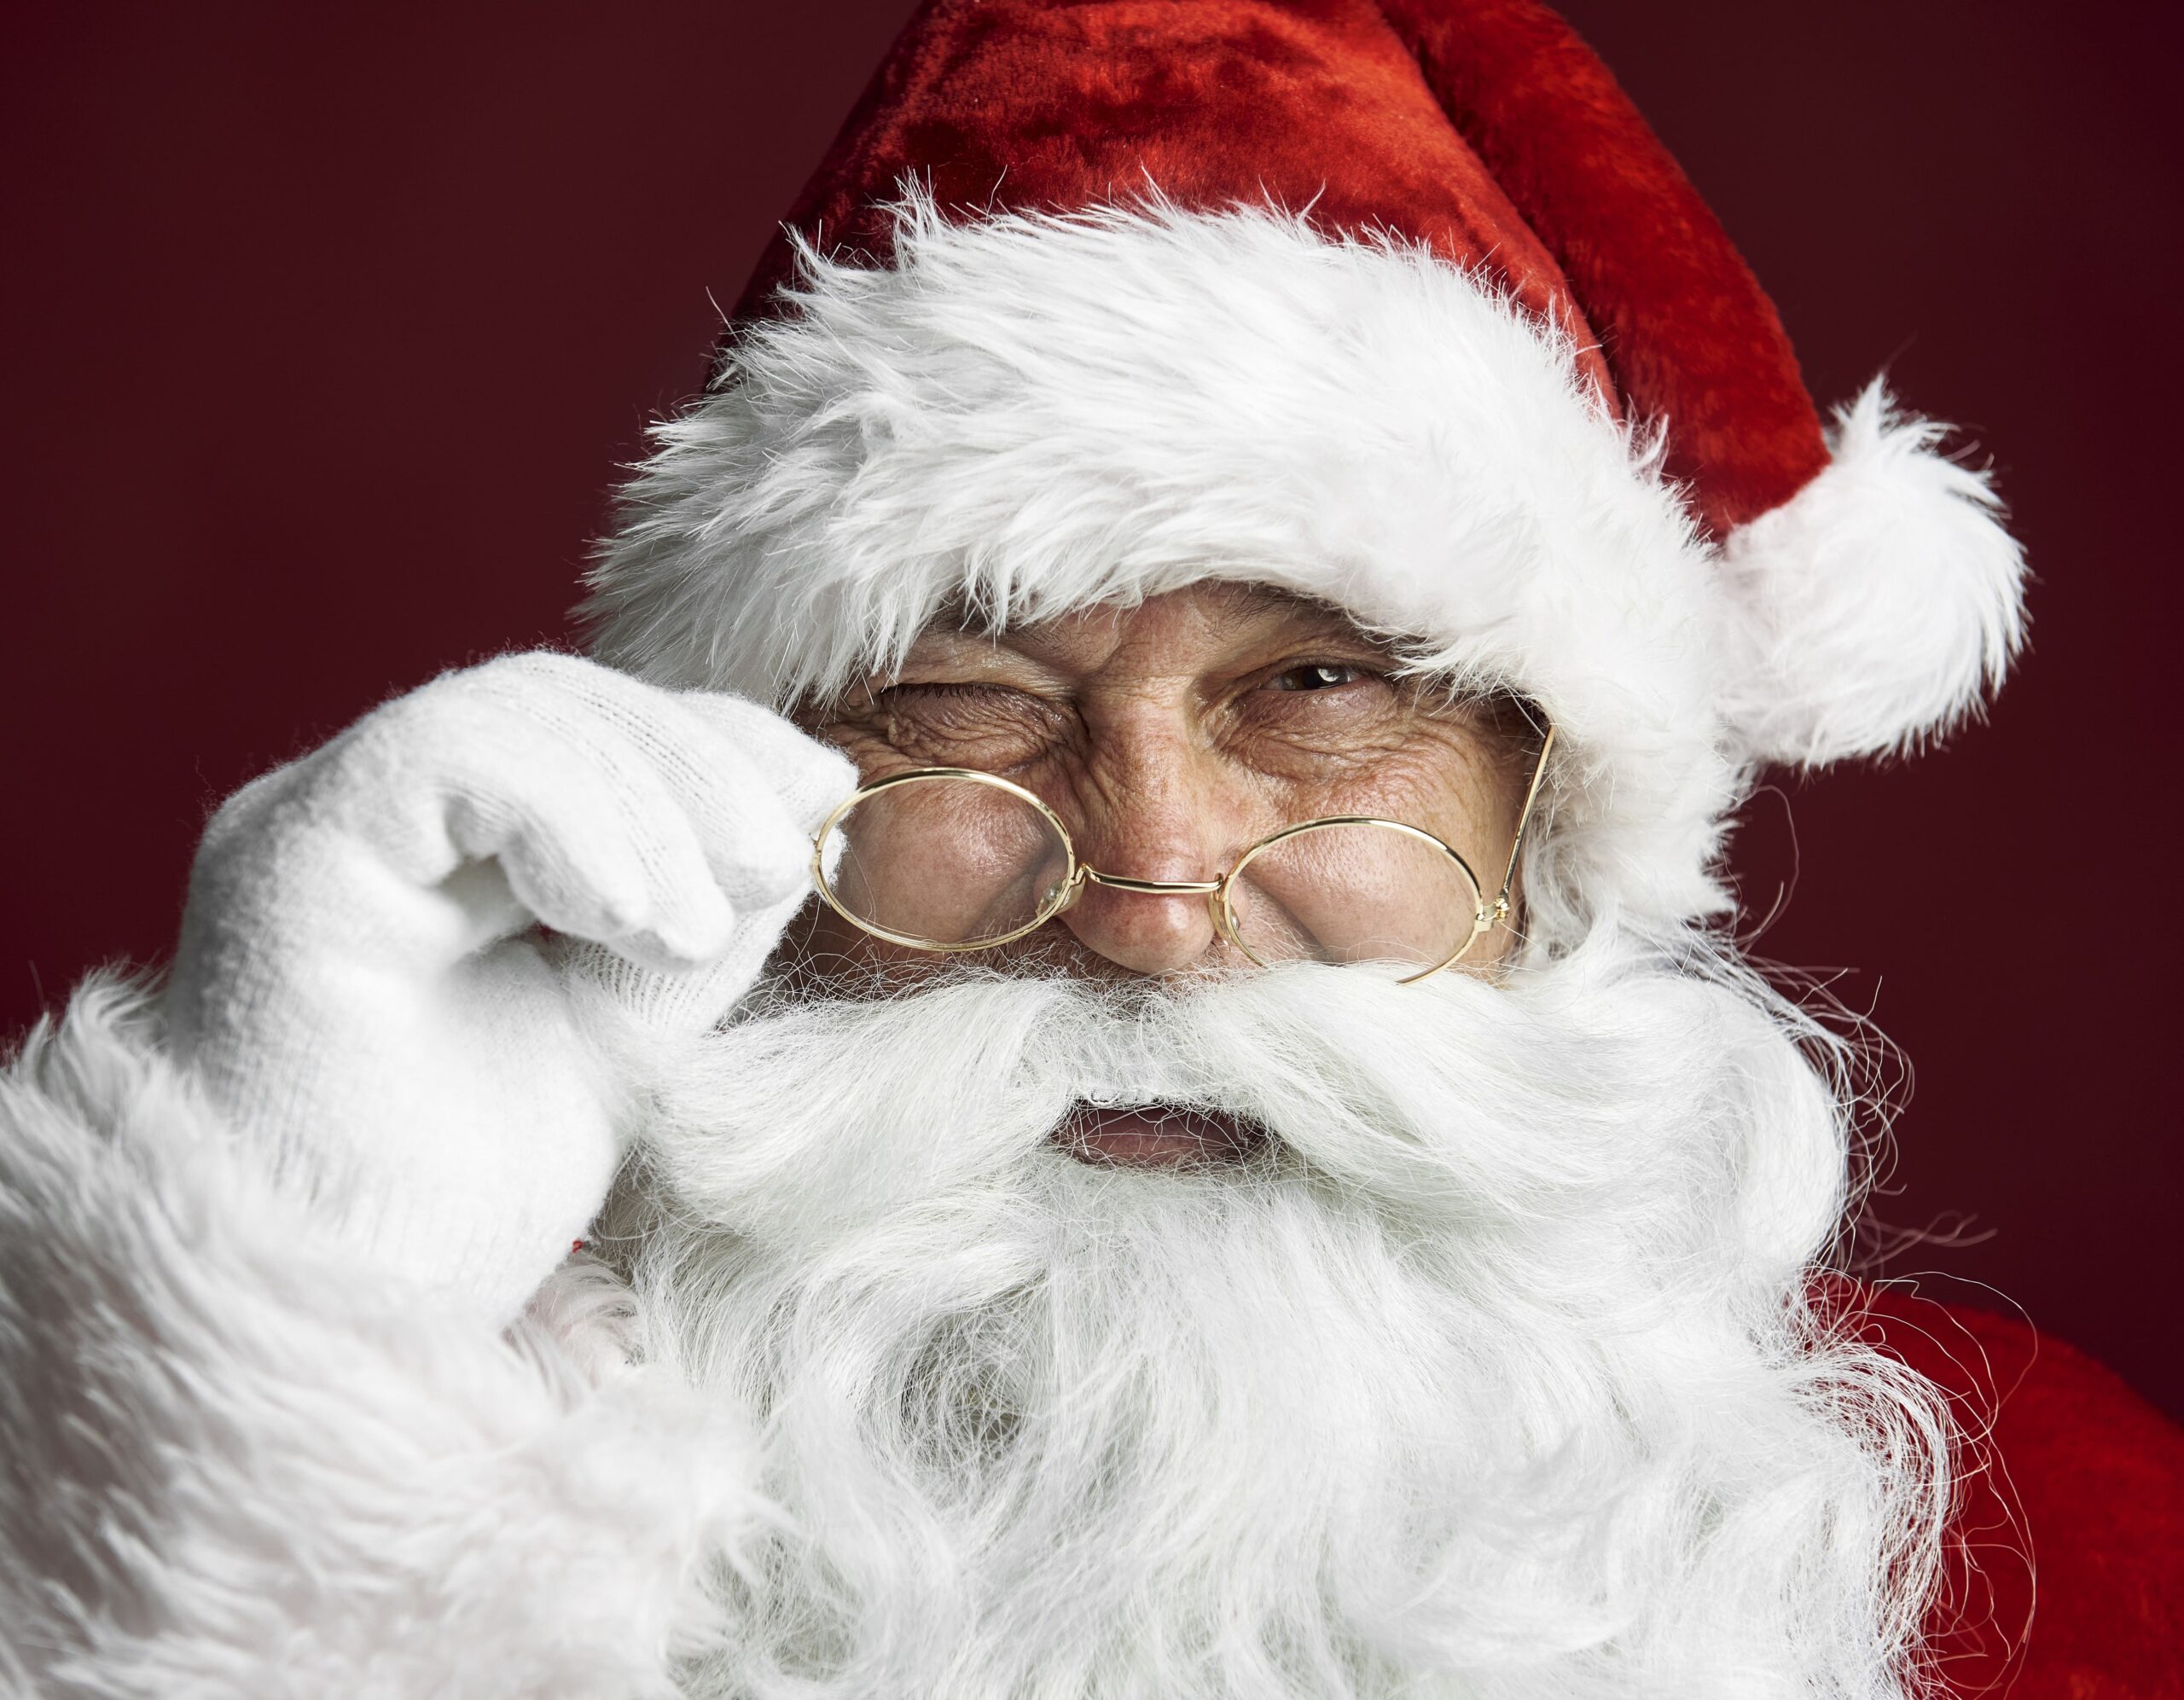 cute-santa-claus-winking-the-eye-2021-11-16-20-55-04-utc